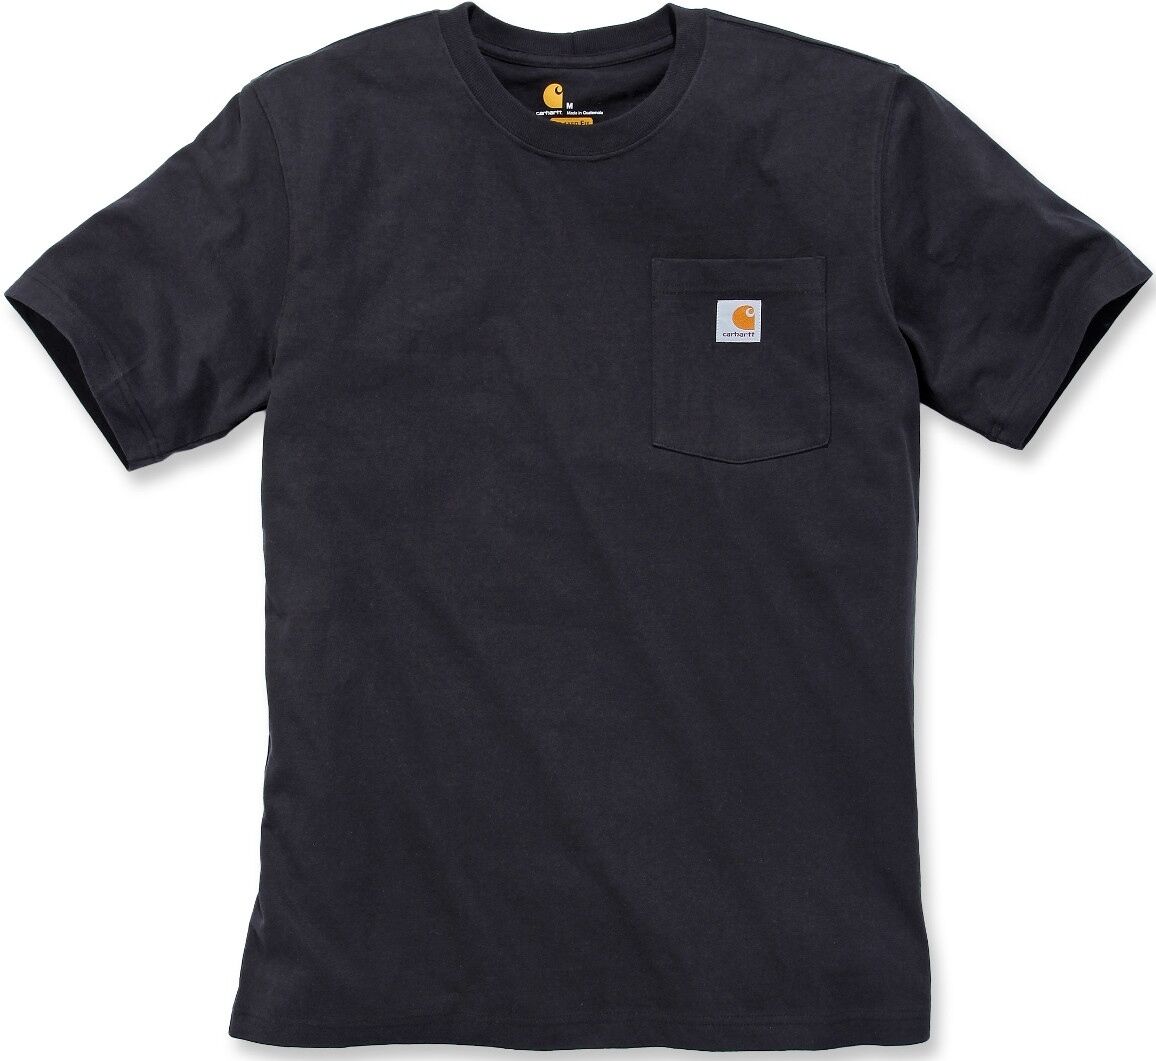 Carhartt Workwear Pocket Camiseta - Negro (S)